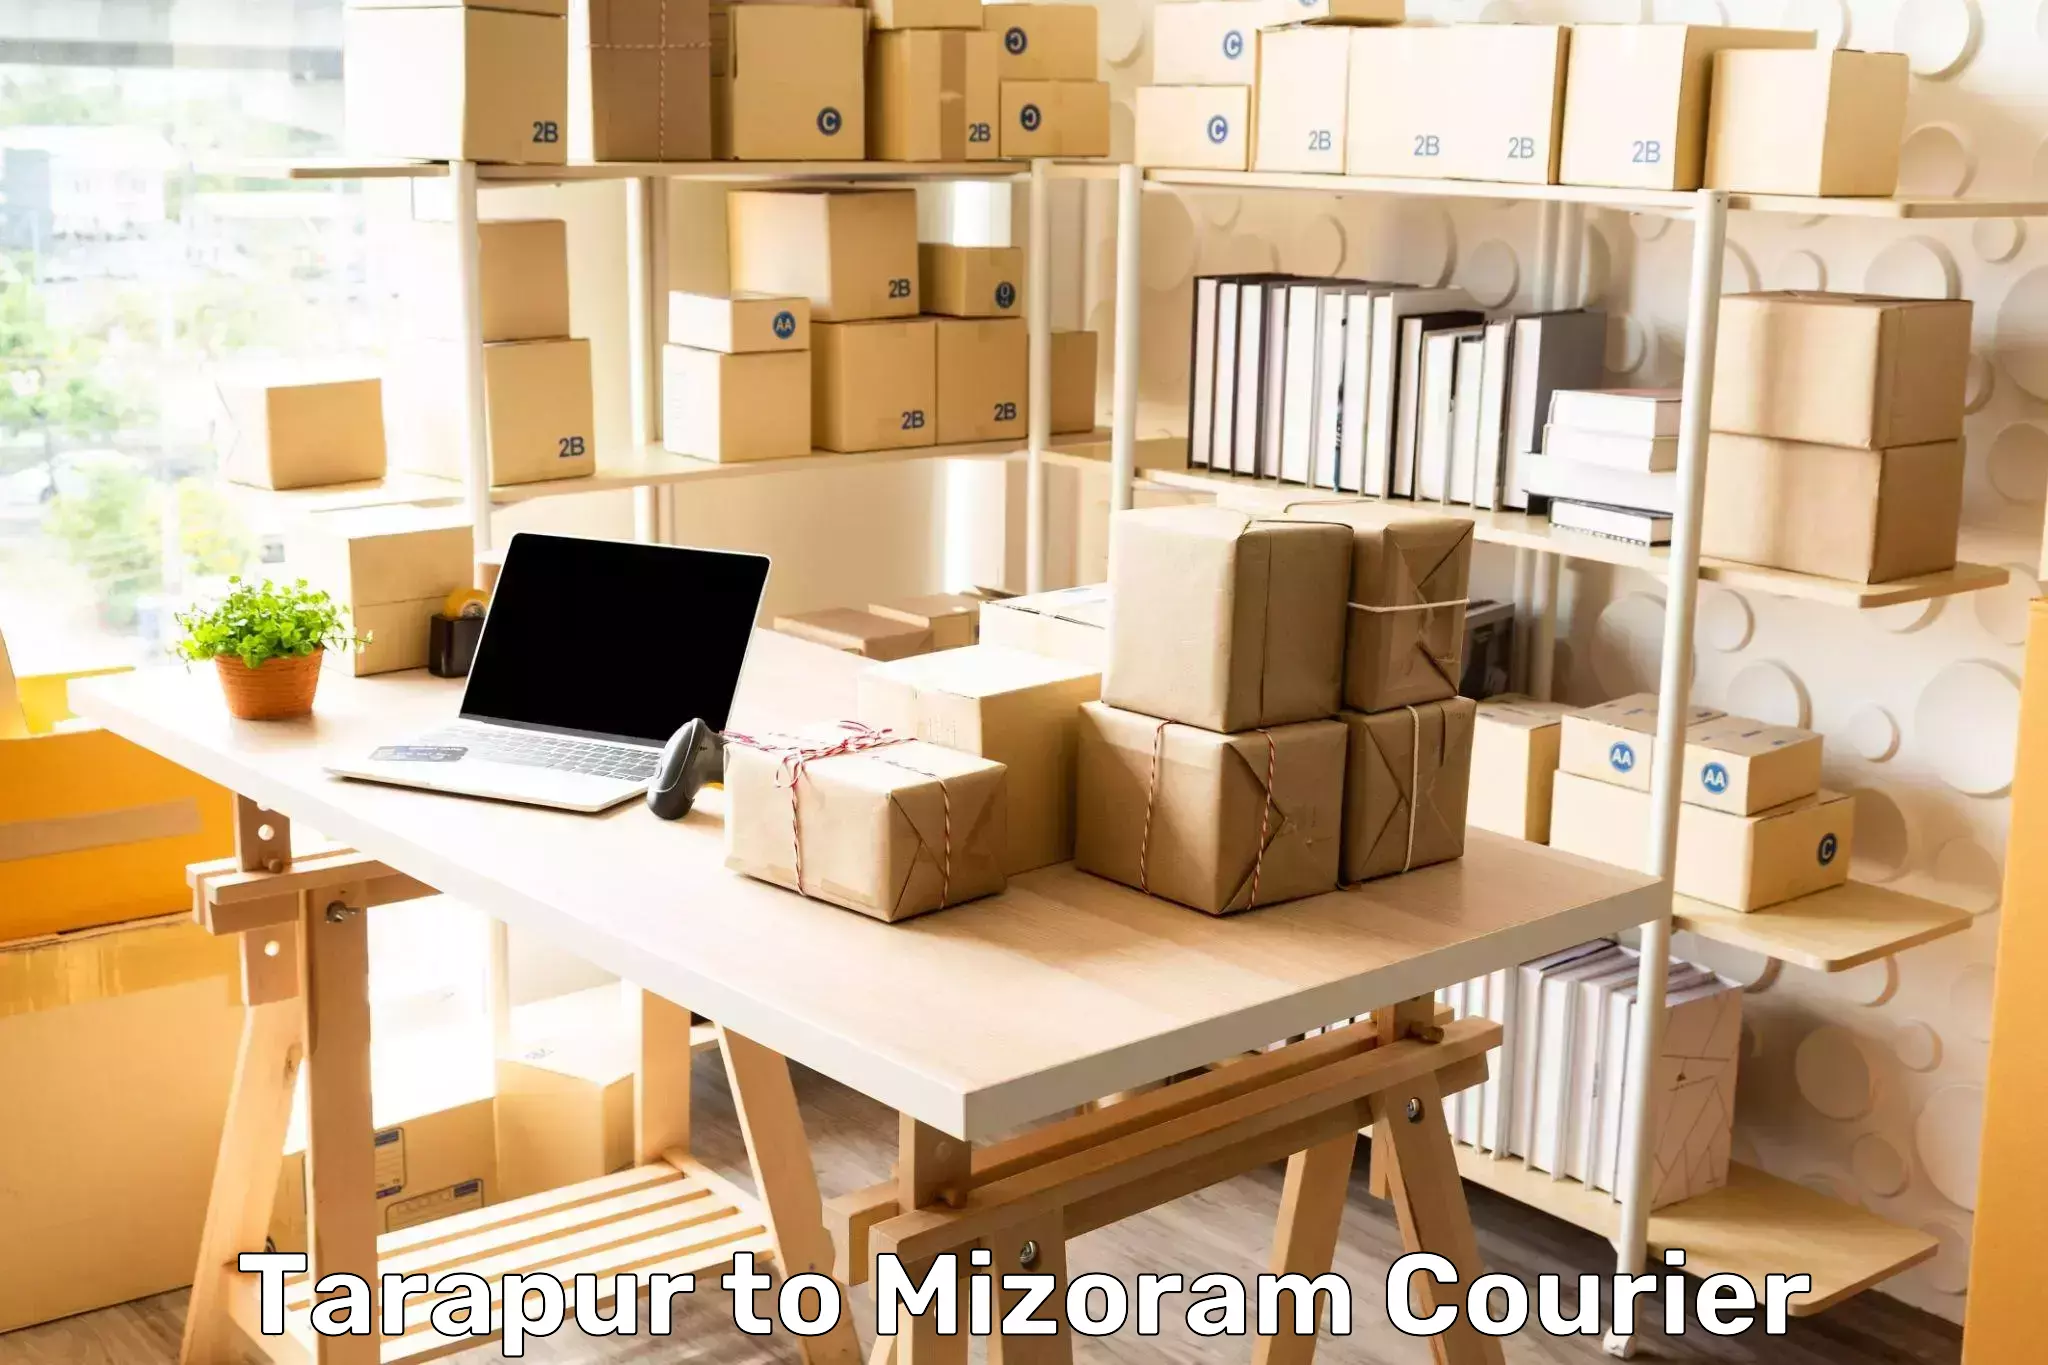 Cargo delivery service Tarapur to Mizoram